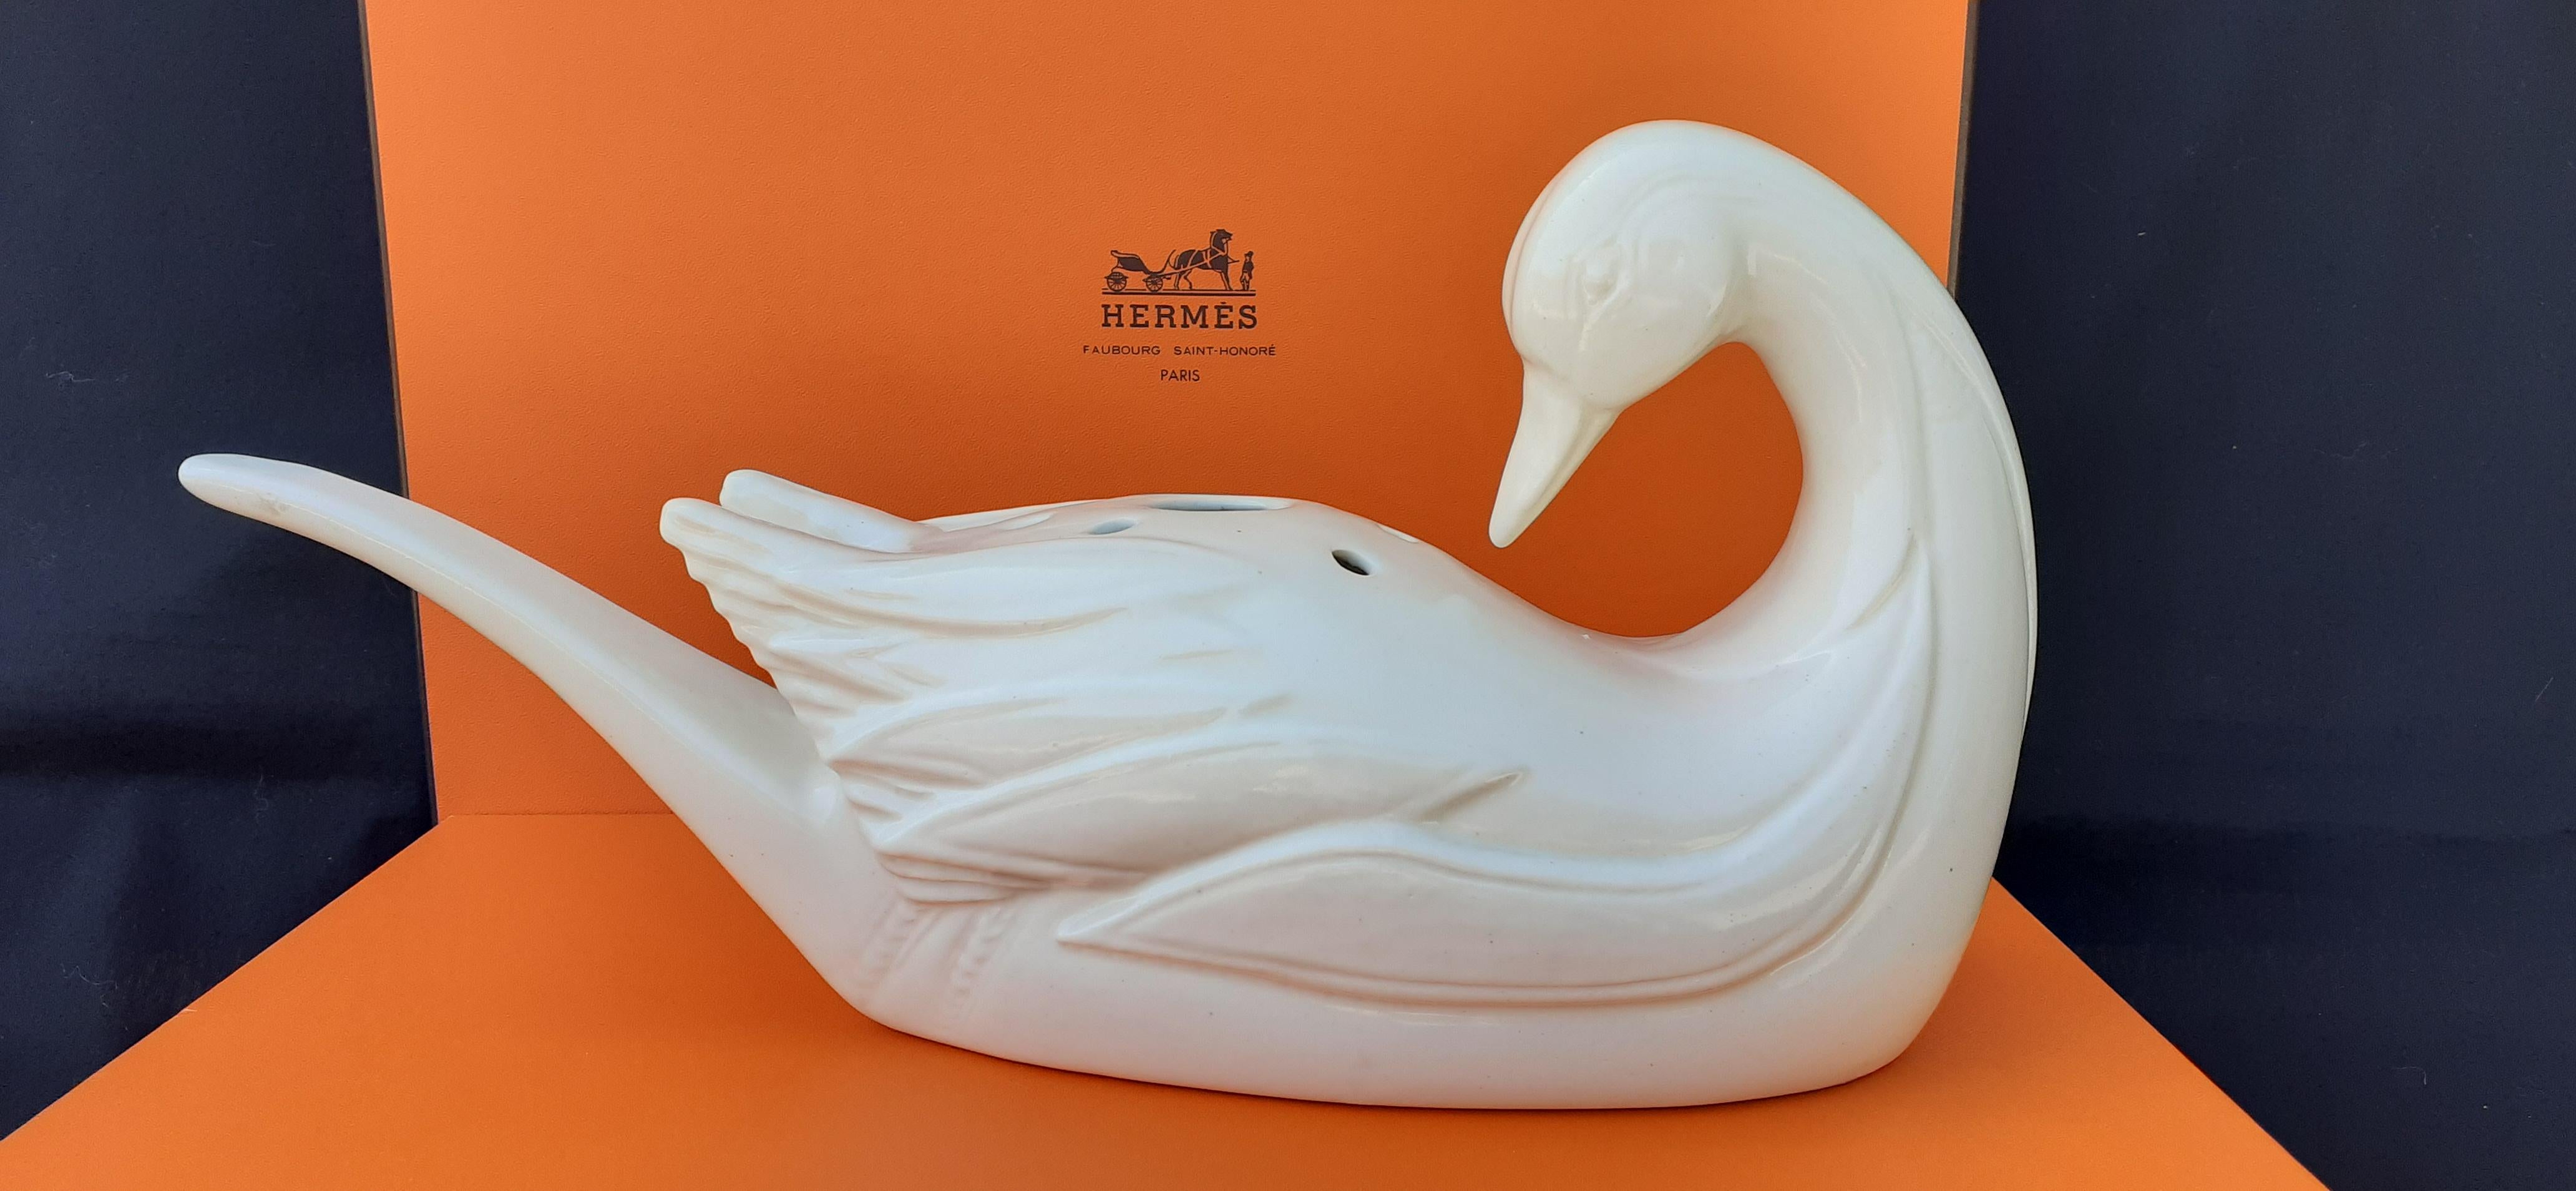 Exceptional Hermès Centerpiece Vase Ceramic Duck From La Mare aux Canards RARE For Sale 2